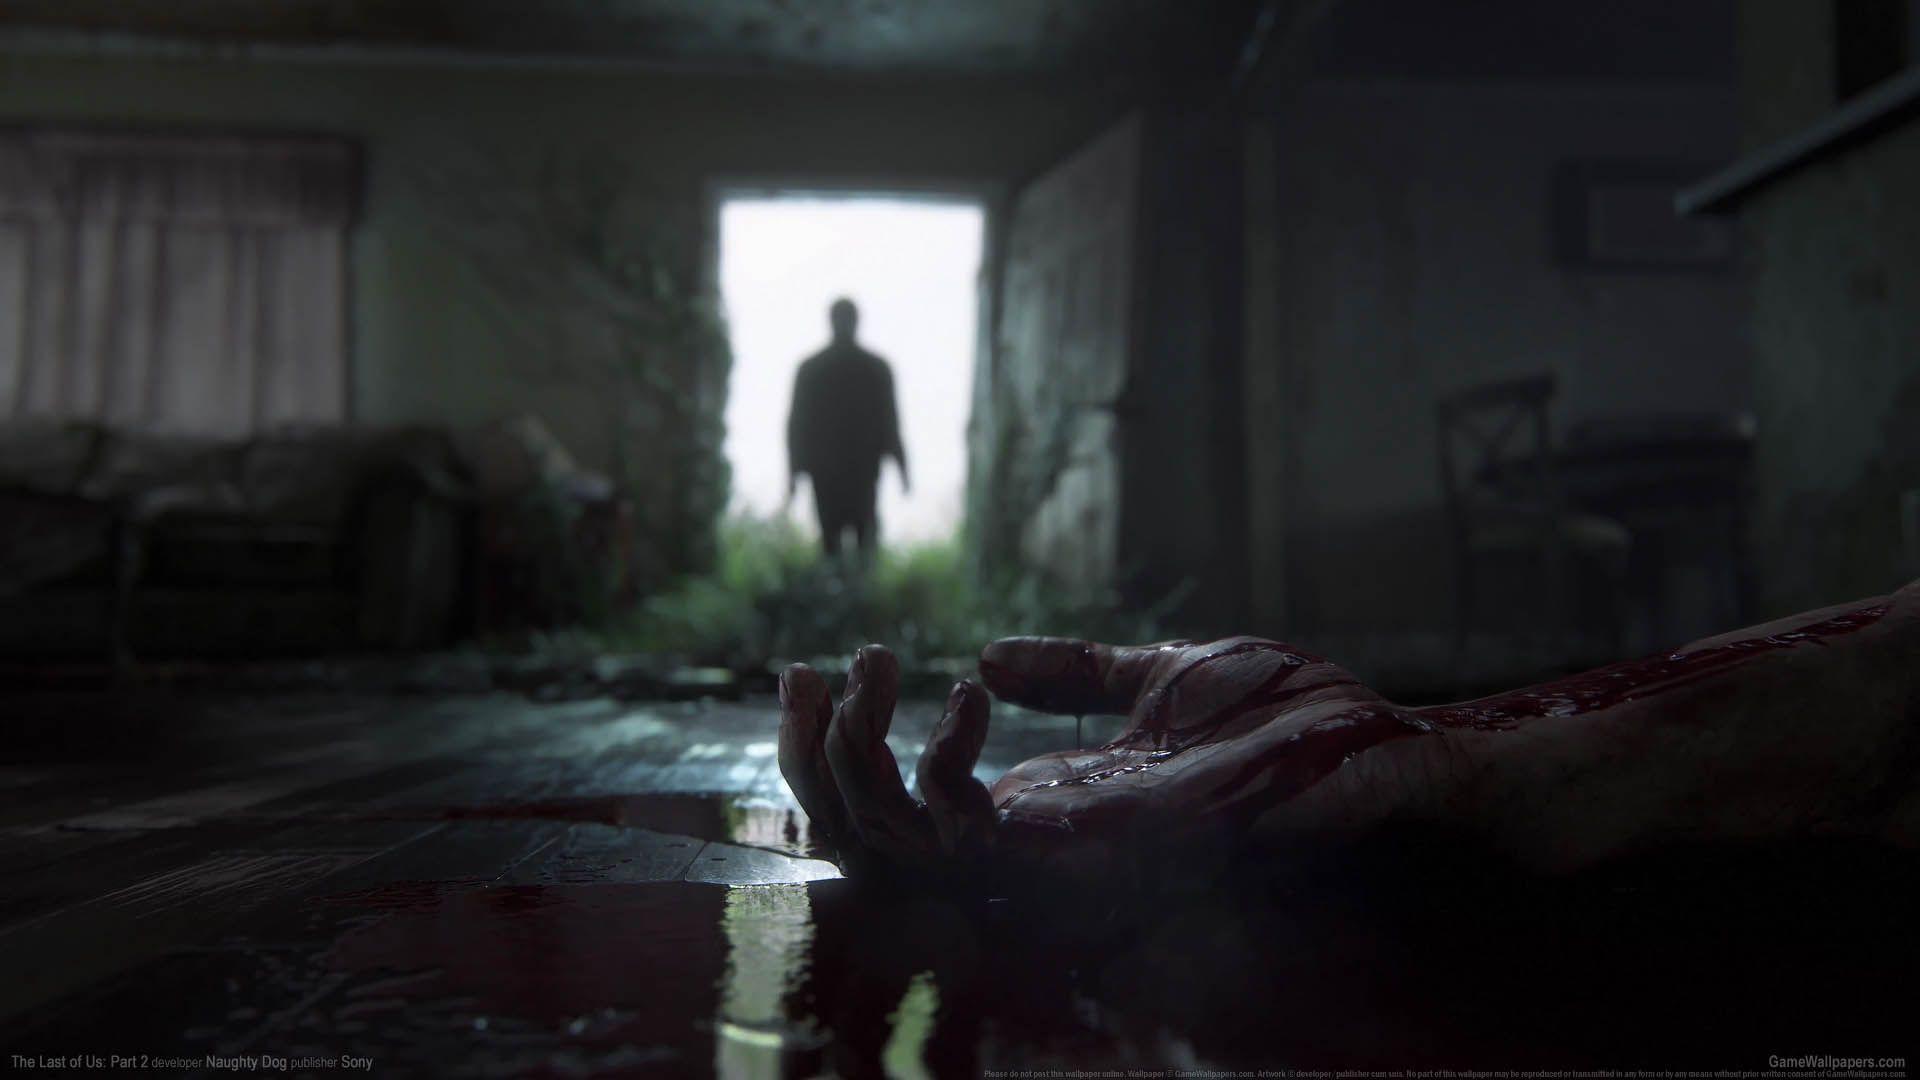 The Last of Us: Part 2 wallpaper or desktop background